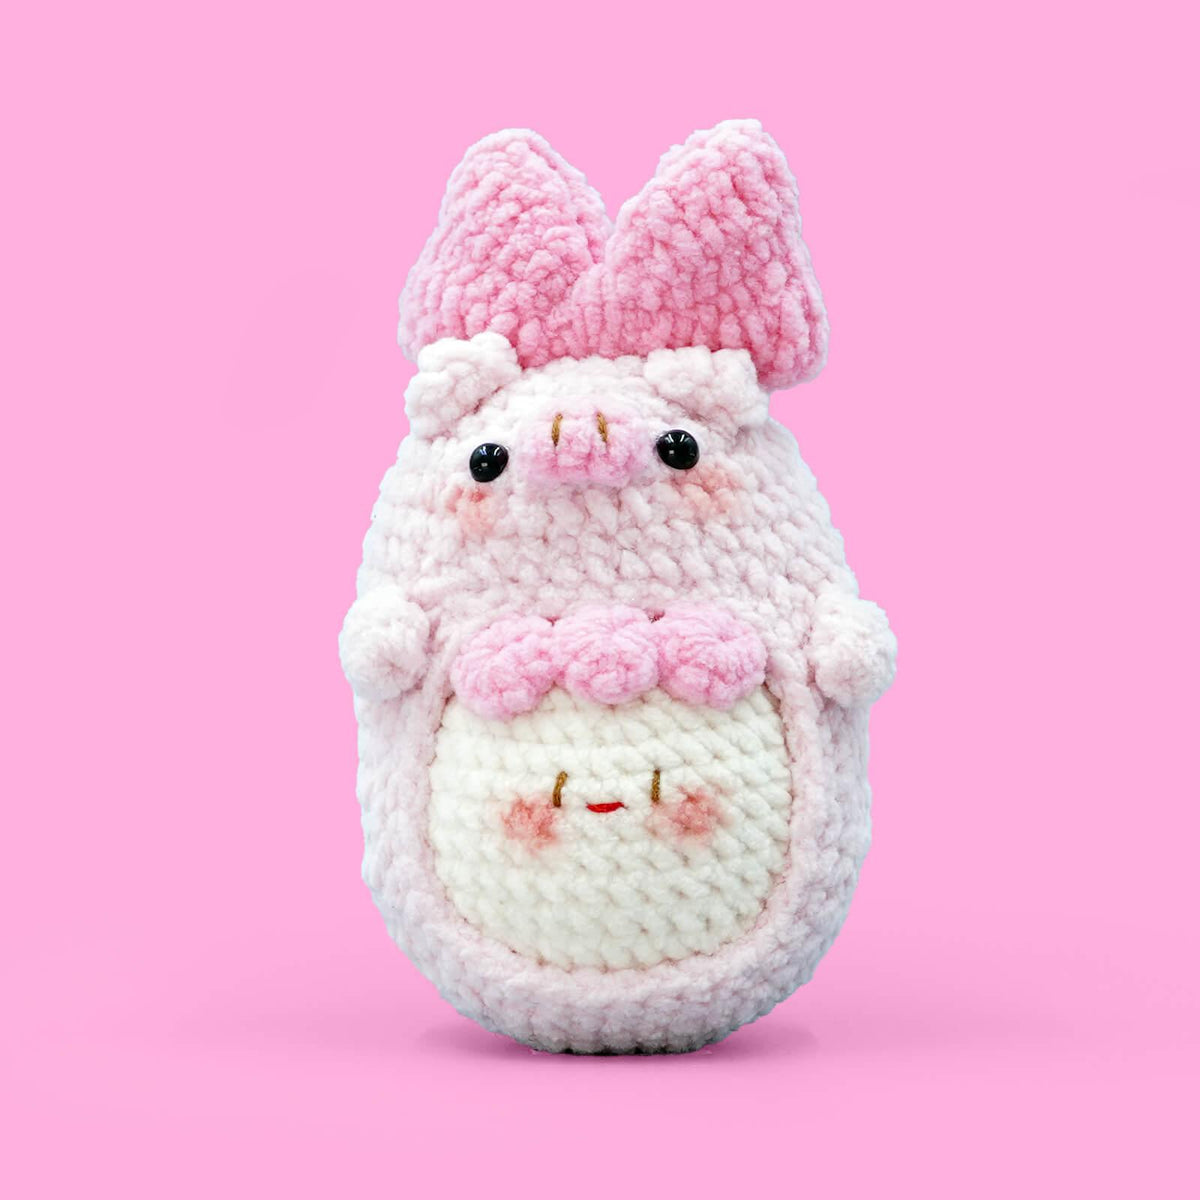 Pig Animal Crochet Kits with Cotton Yarn for Kids - HiCrochet